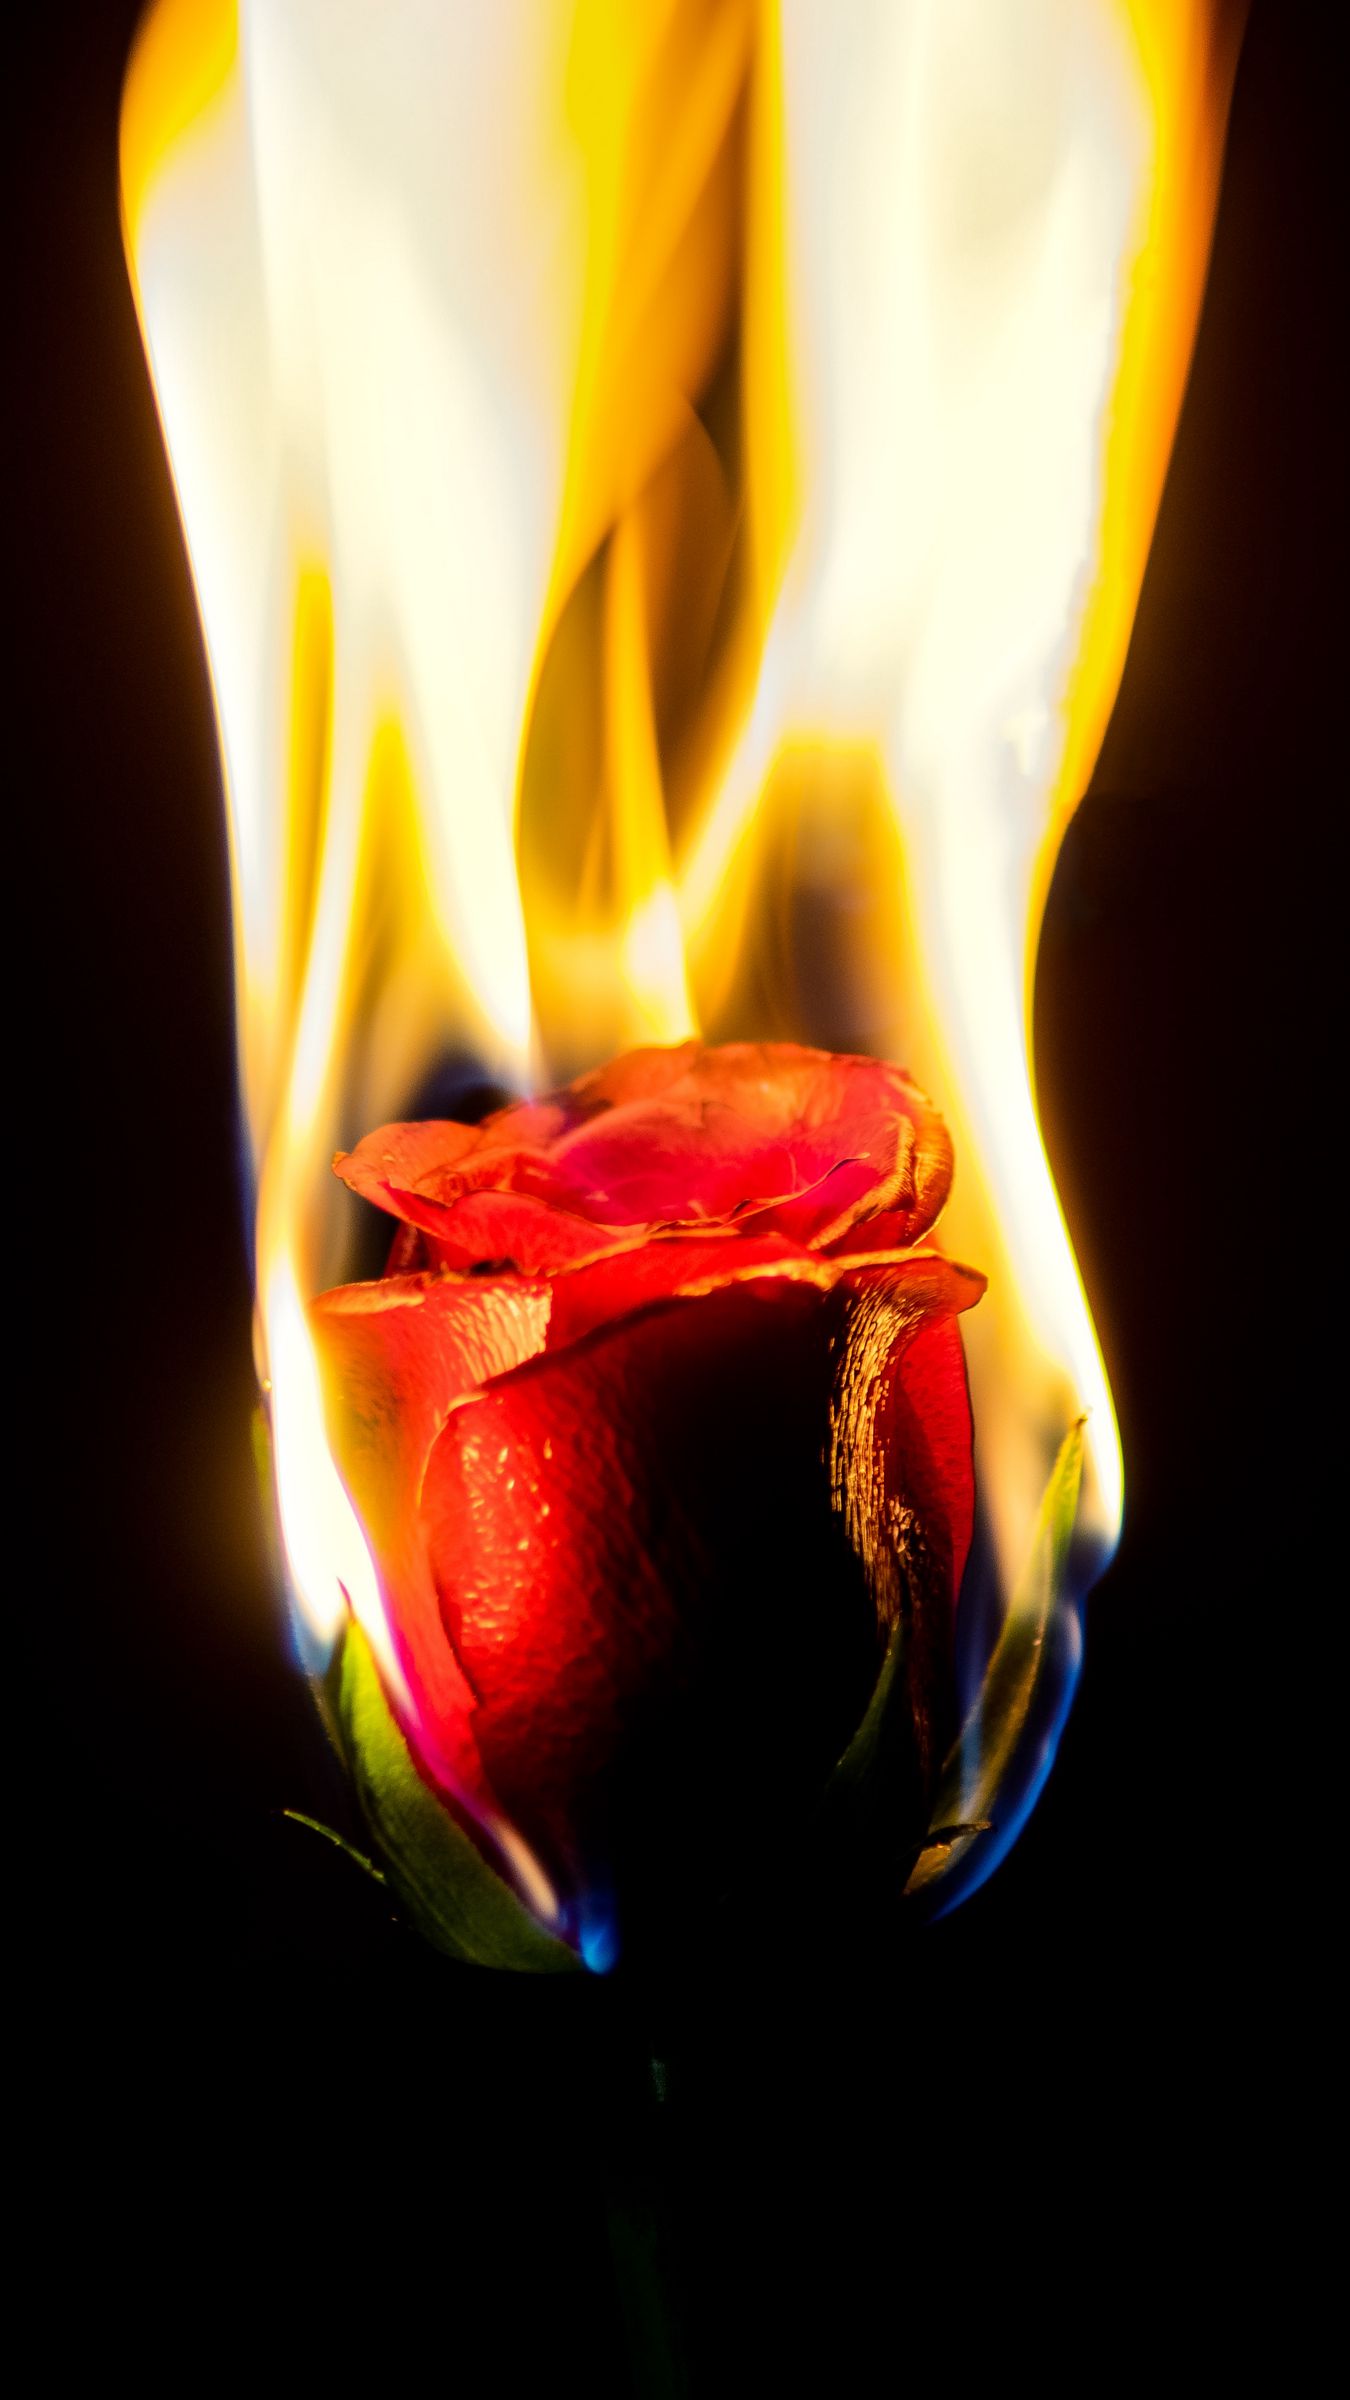 Wallpaper macro, rose, fire images for desktop, section цветы - download